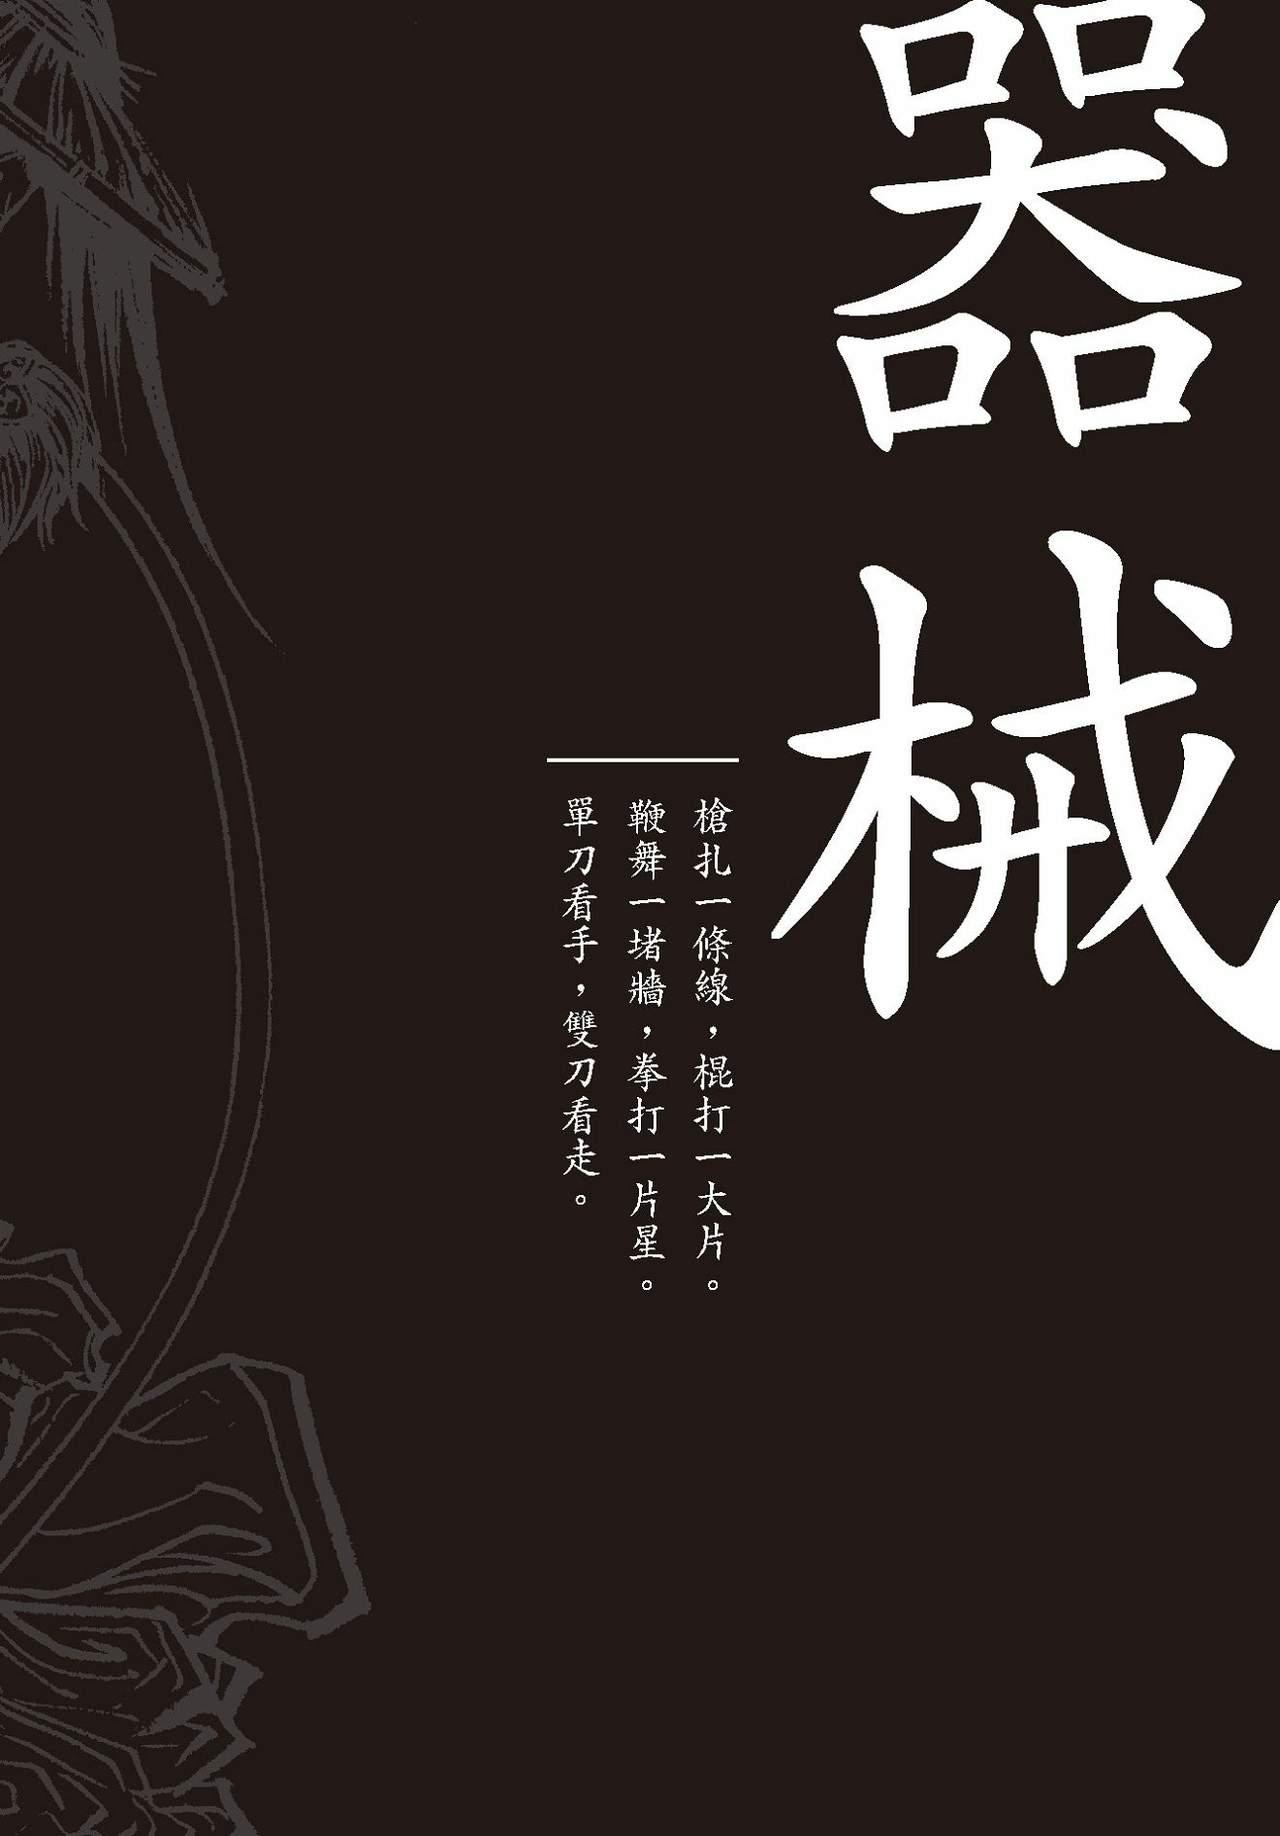 [MAIRENJIE]Sex-files of Chinese Swordsmen-nine true Penises | 狎客行-九真陰經 39